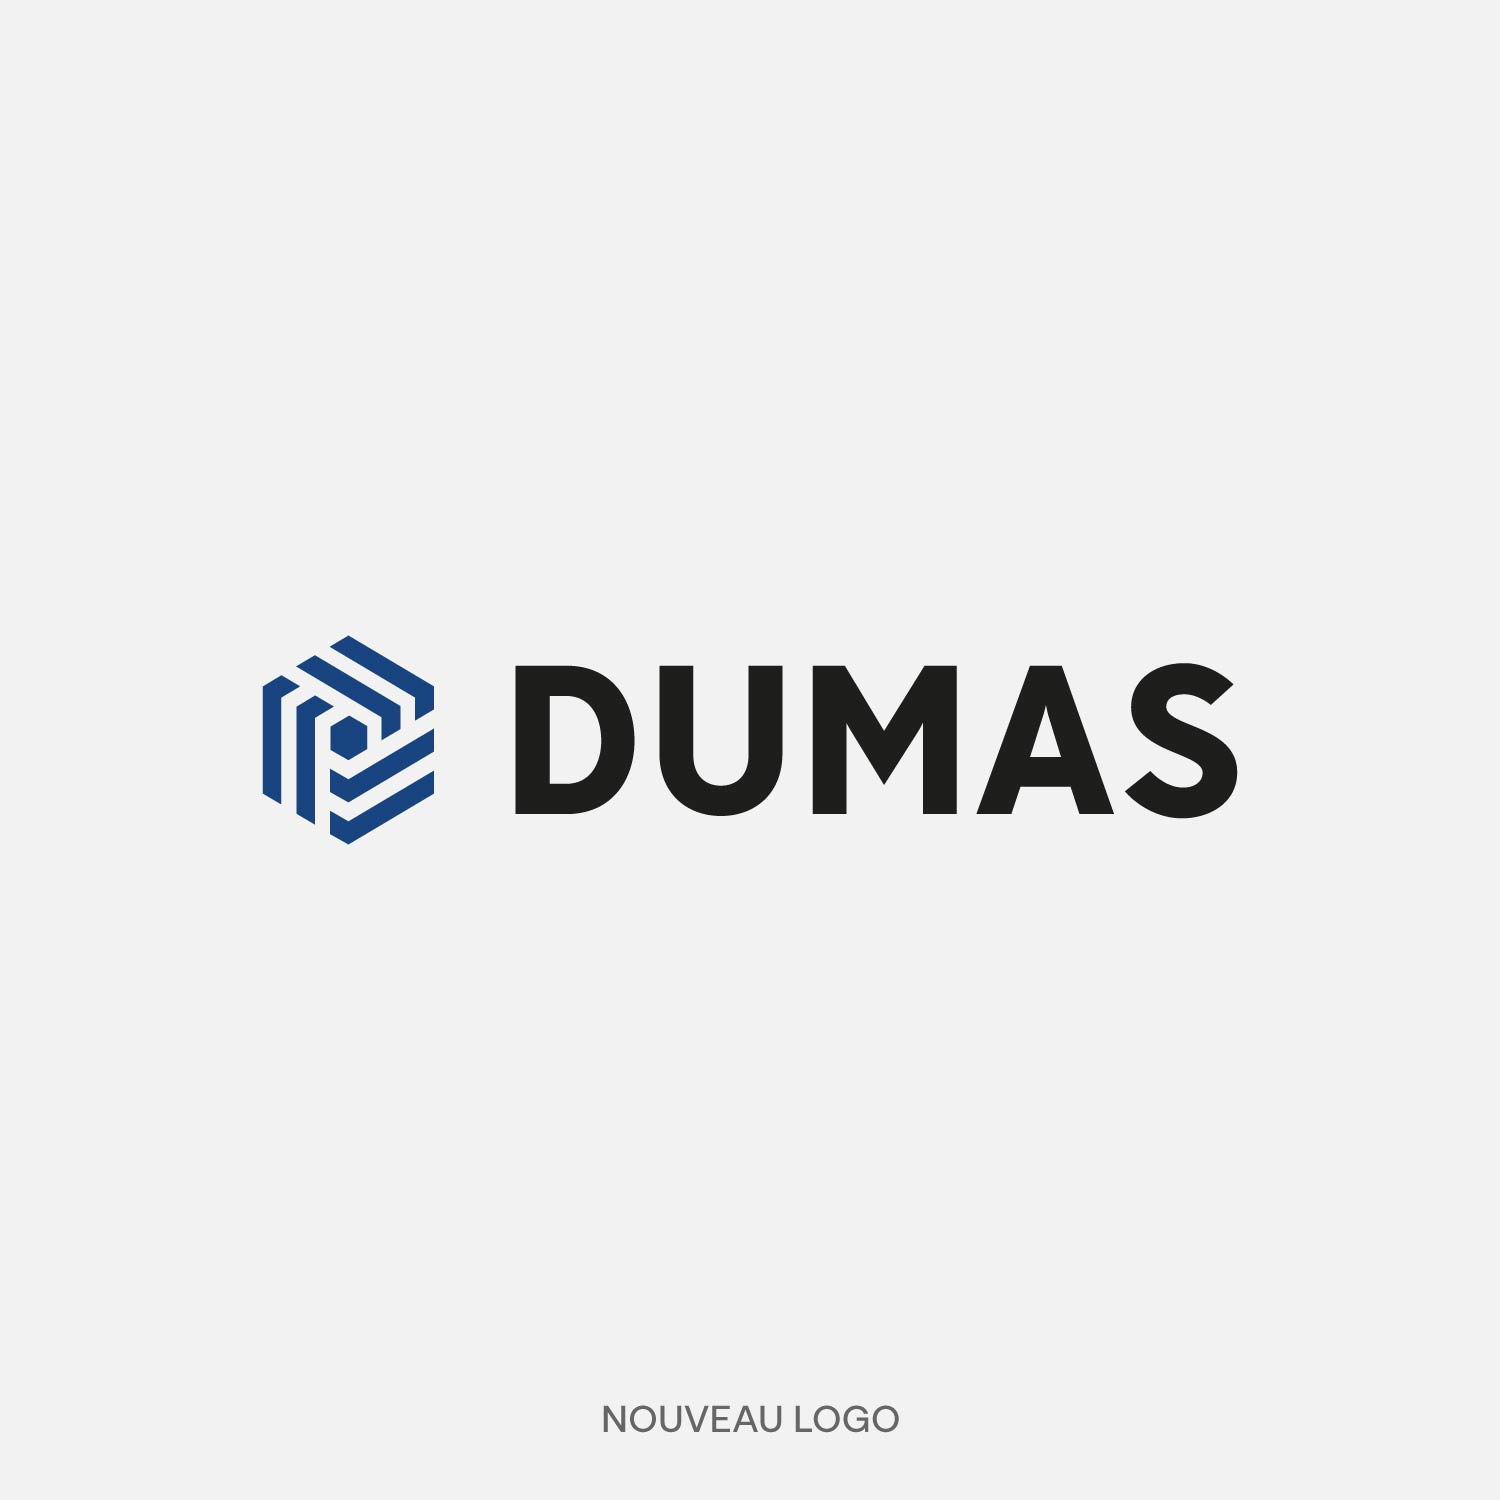 dumas_logo_after